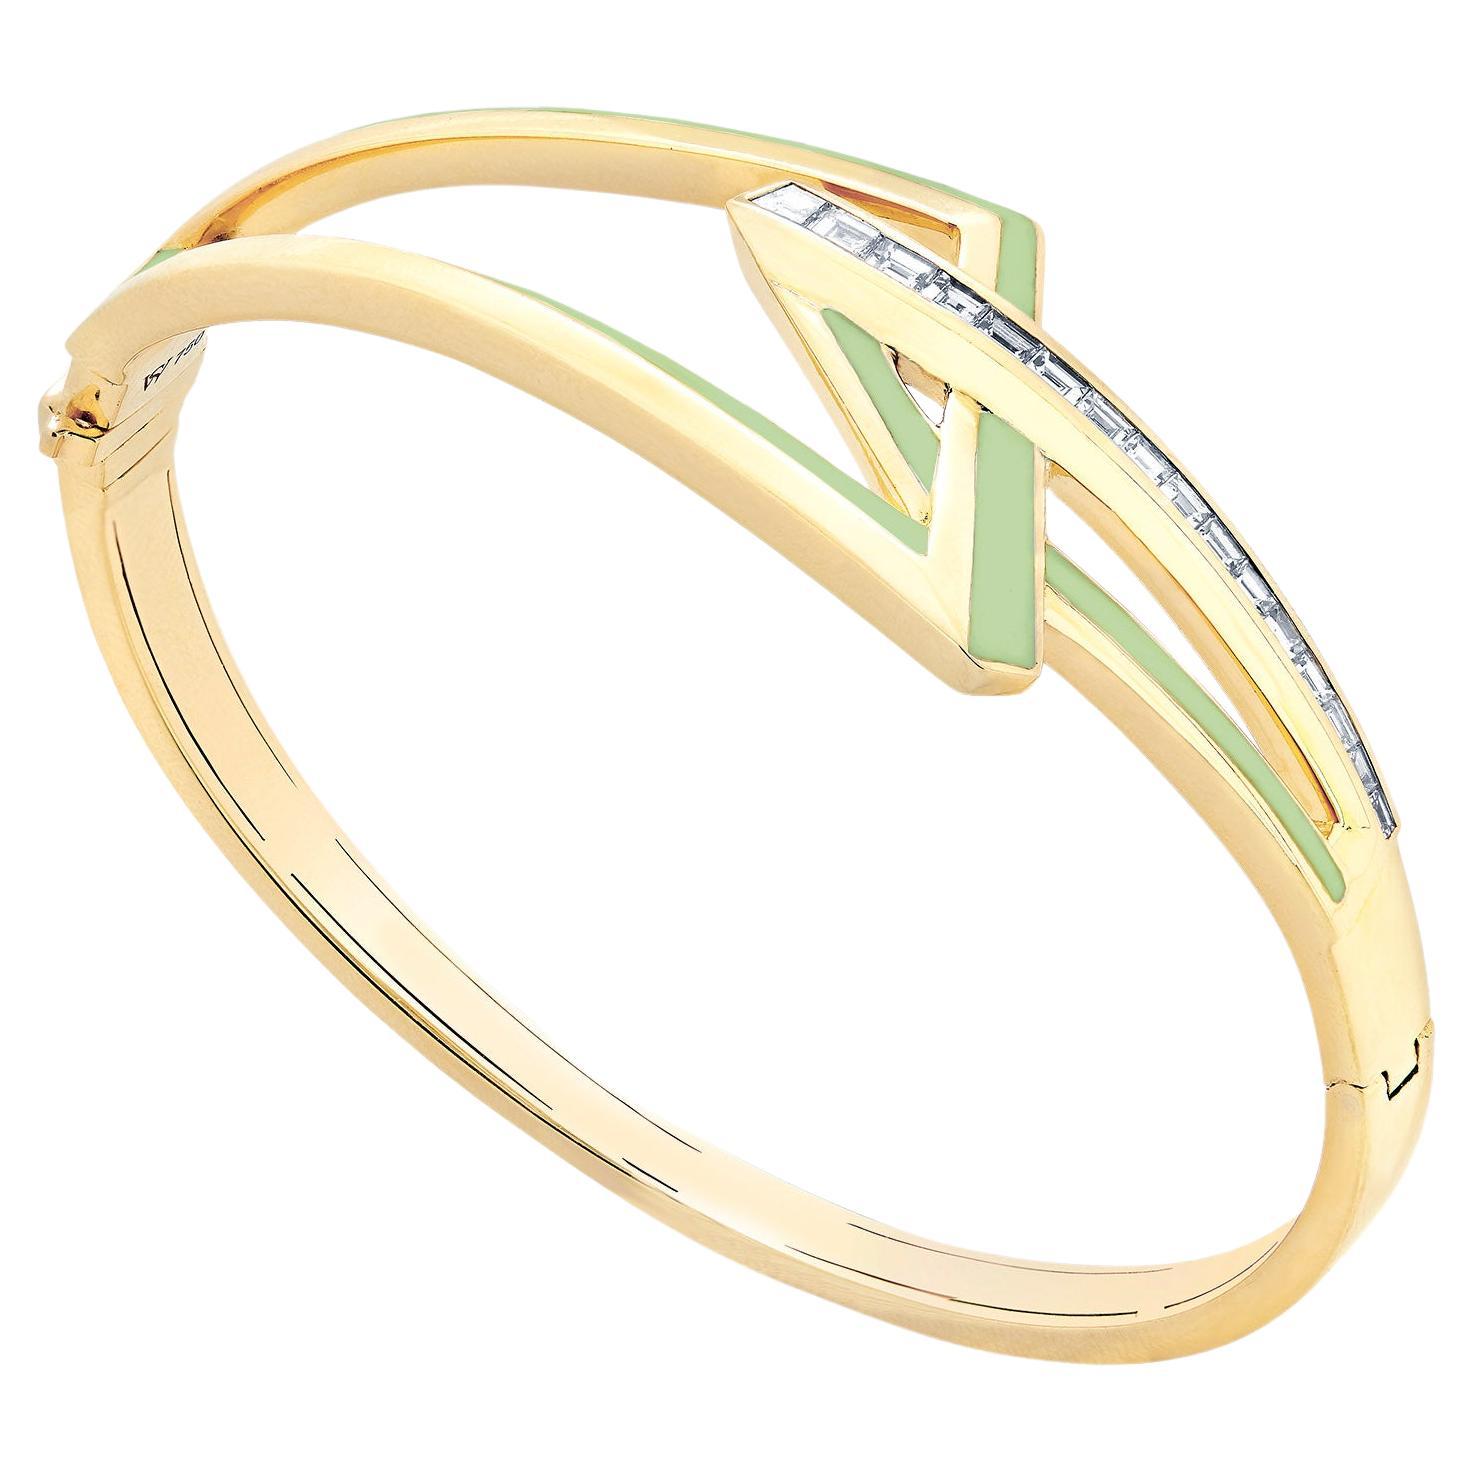 Vertigo Obtuse Bracelet - 18 Carat Yellow Gold and White Diamond For Sale